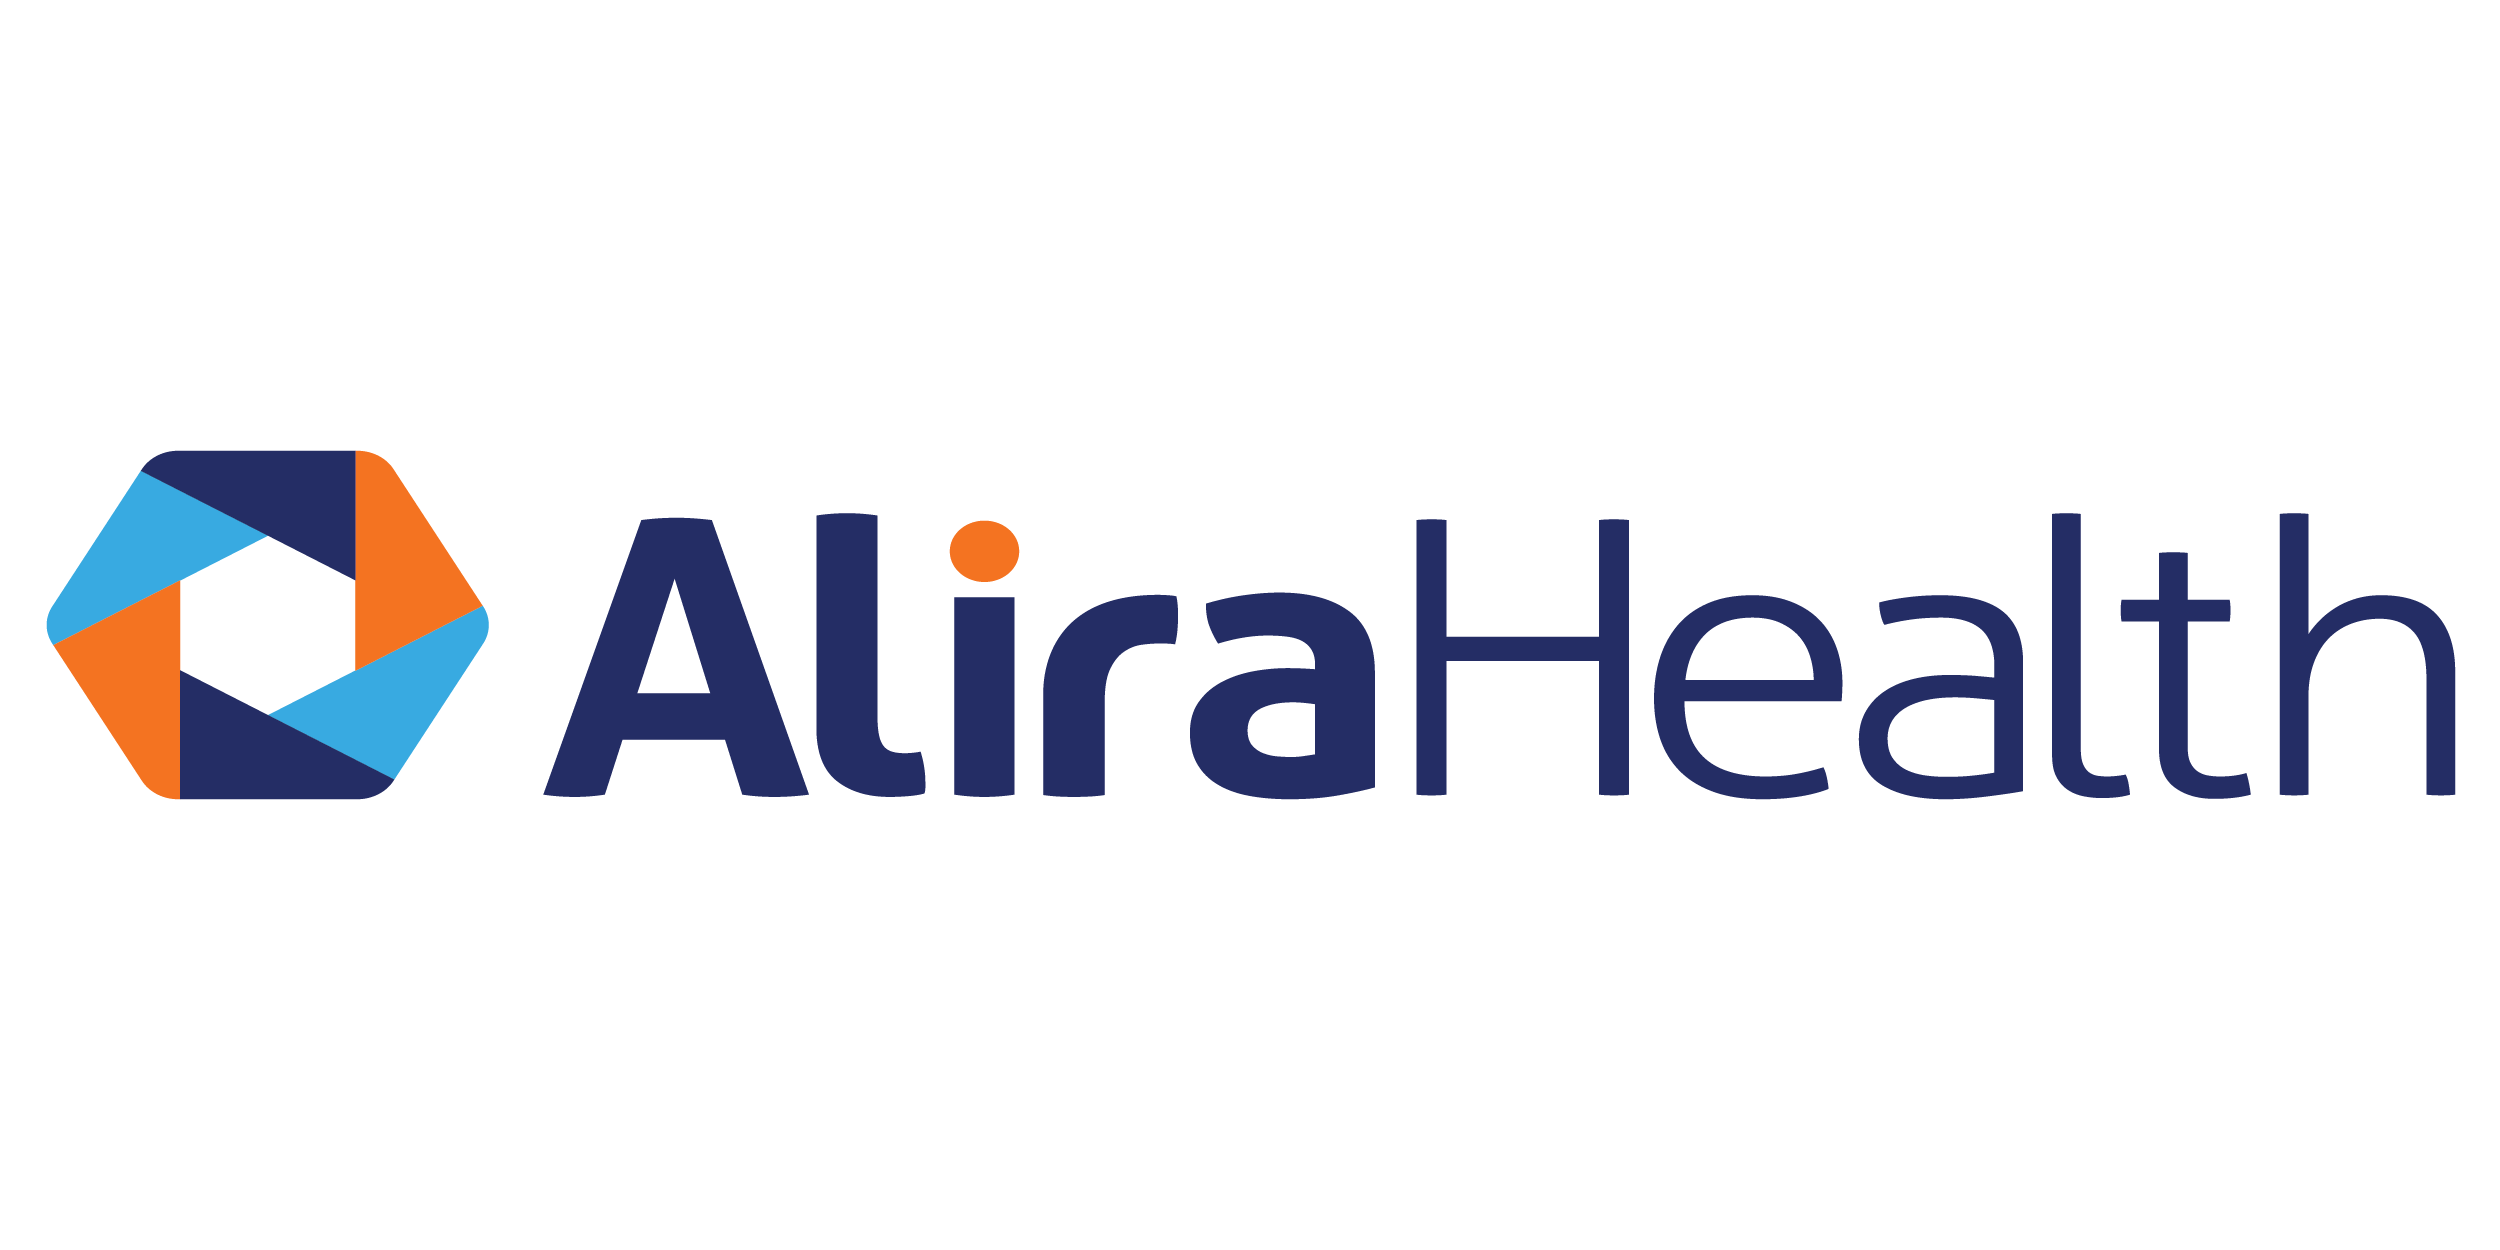 Alira Health Logo